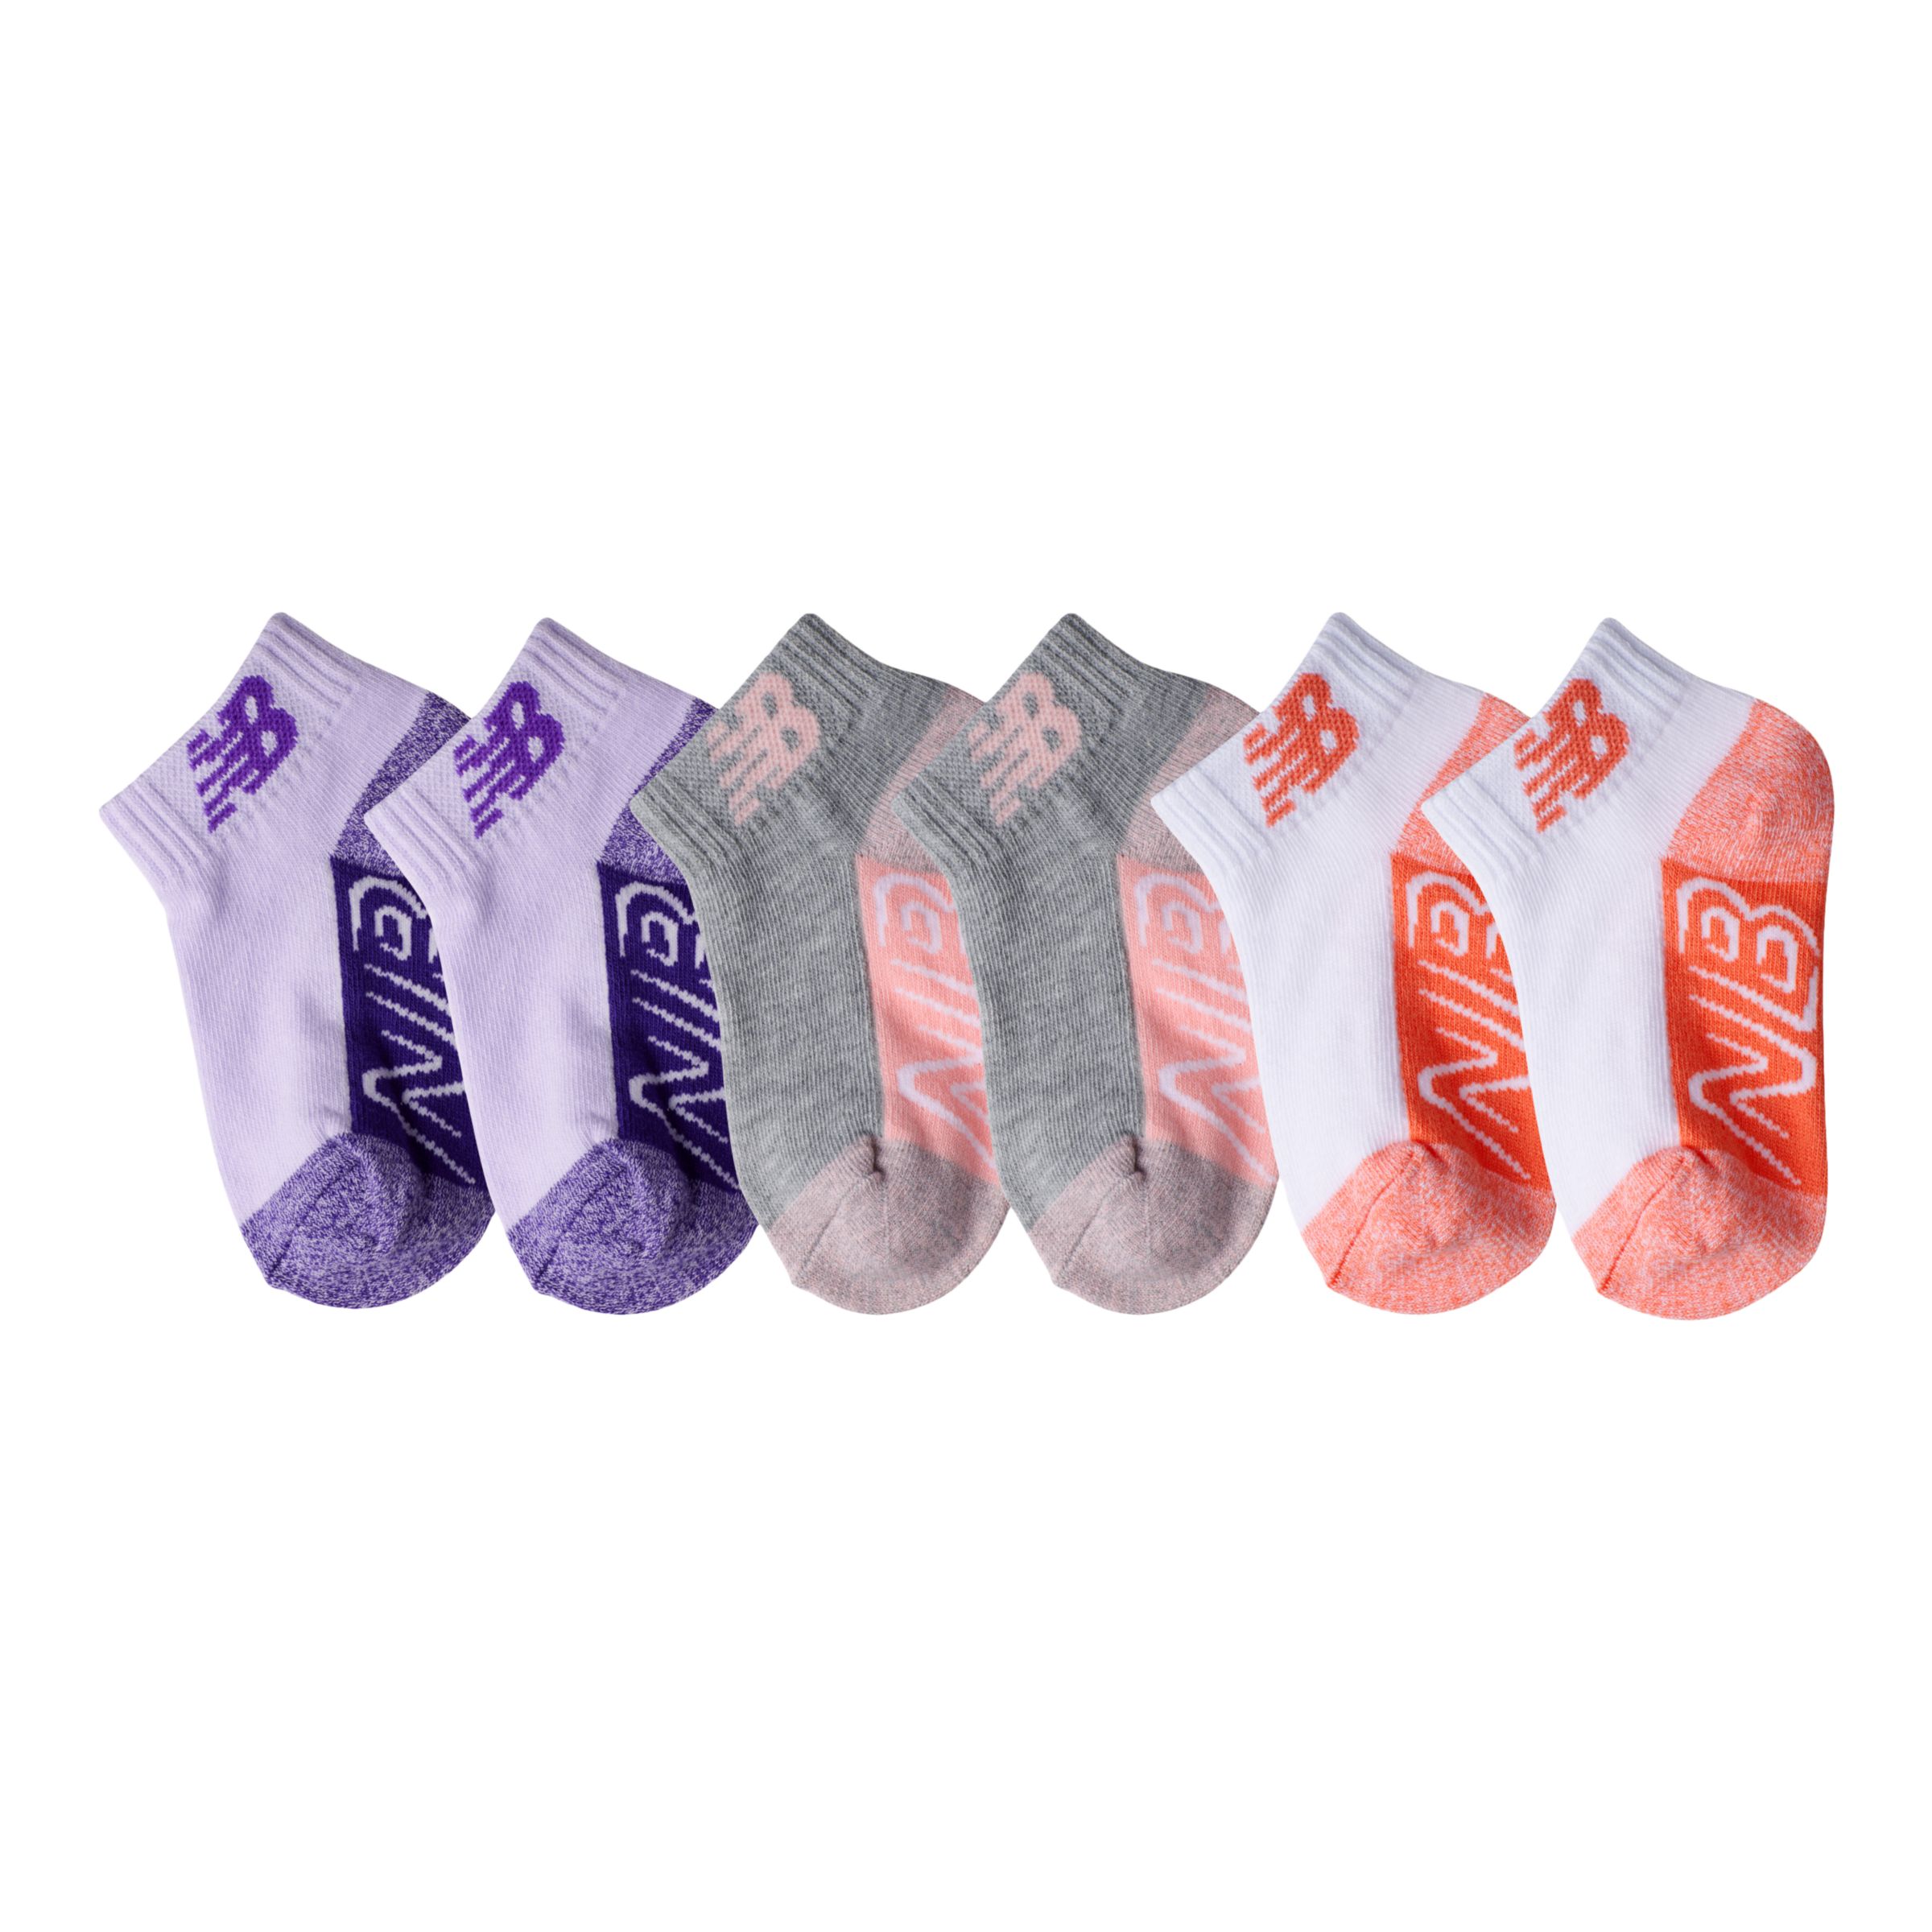 Kids Ankle Socks 6 Pack - New Balance